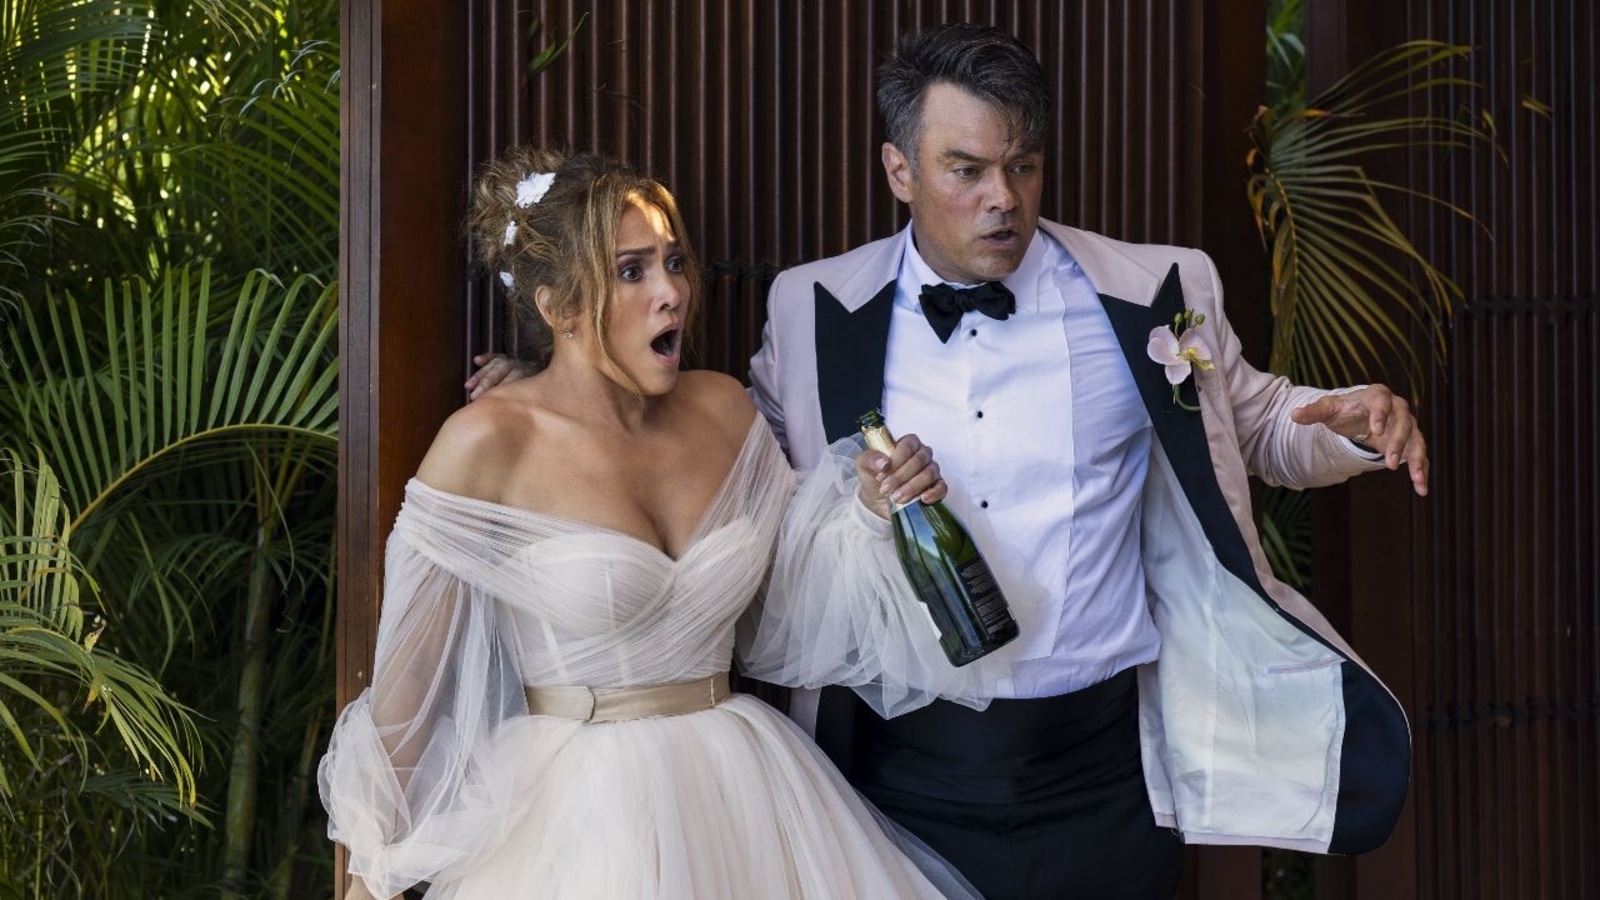 Shotgun Wedding movie review: This vanilla rom-com needed more